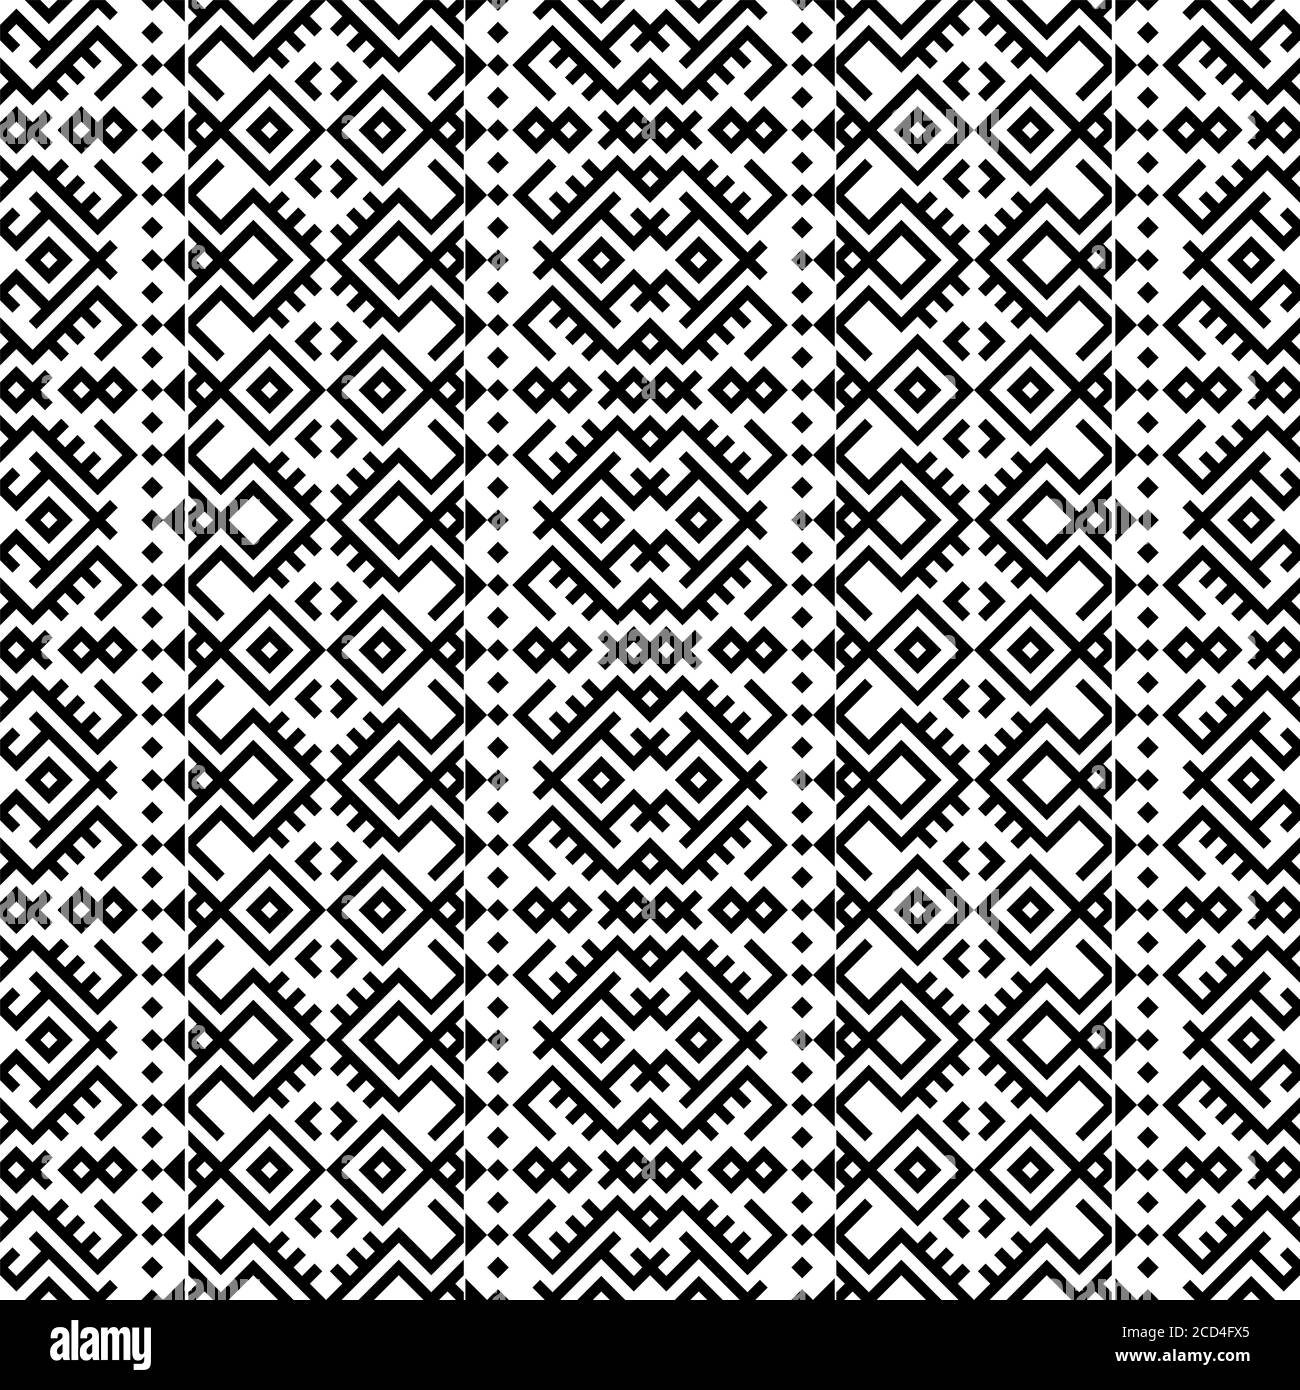 Vertical traditional aztec pattern texture design vector Stock Photo ...